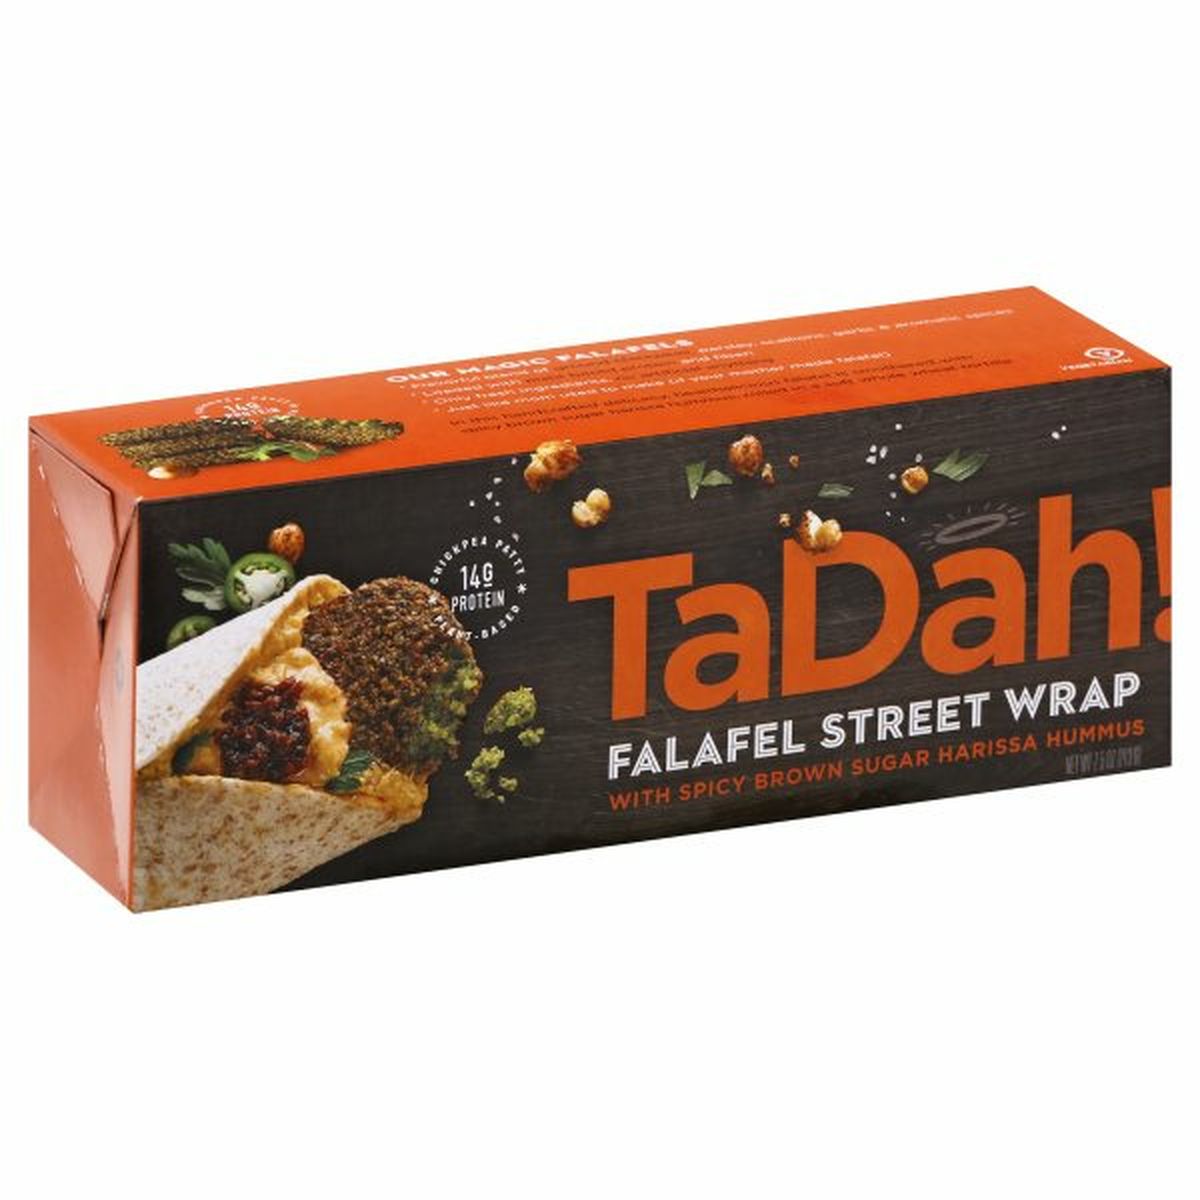 Calories in TaDah Falafel Street Wrap, with Spicy Brown Sugar Harissa Hummus